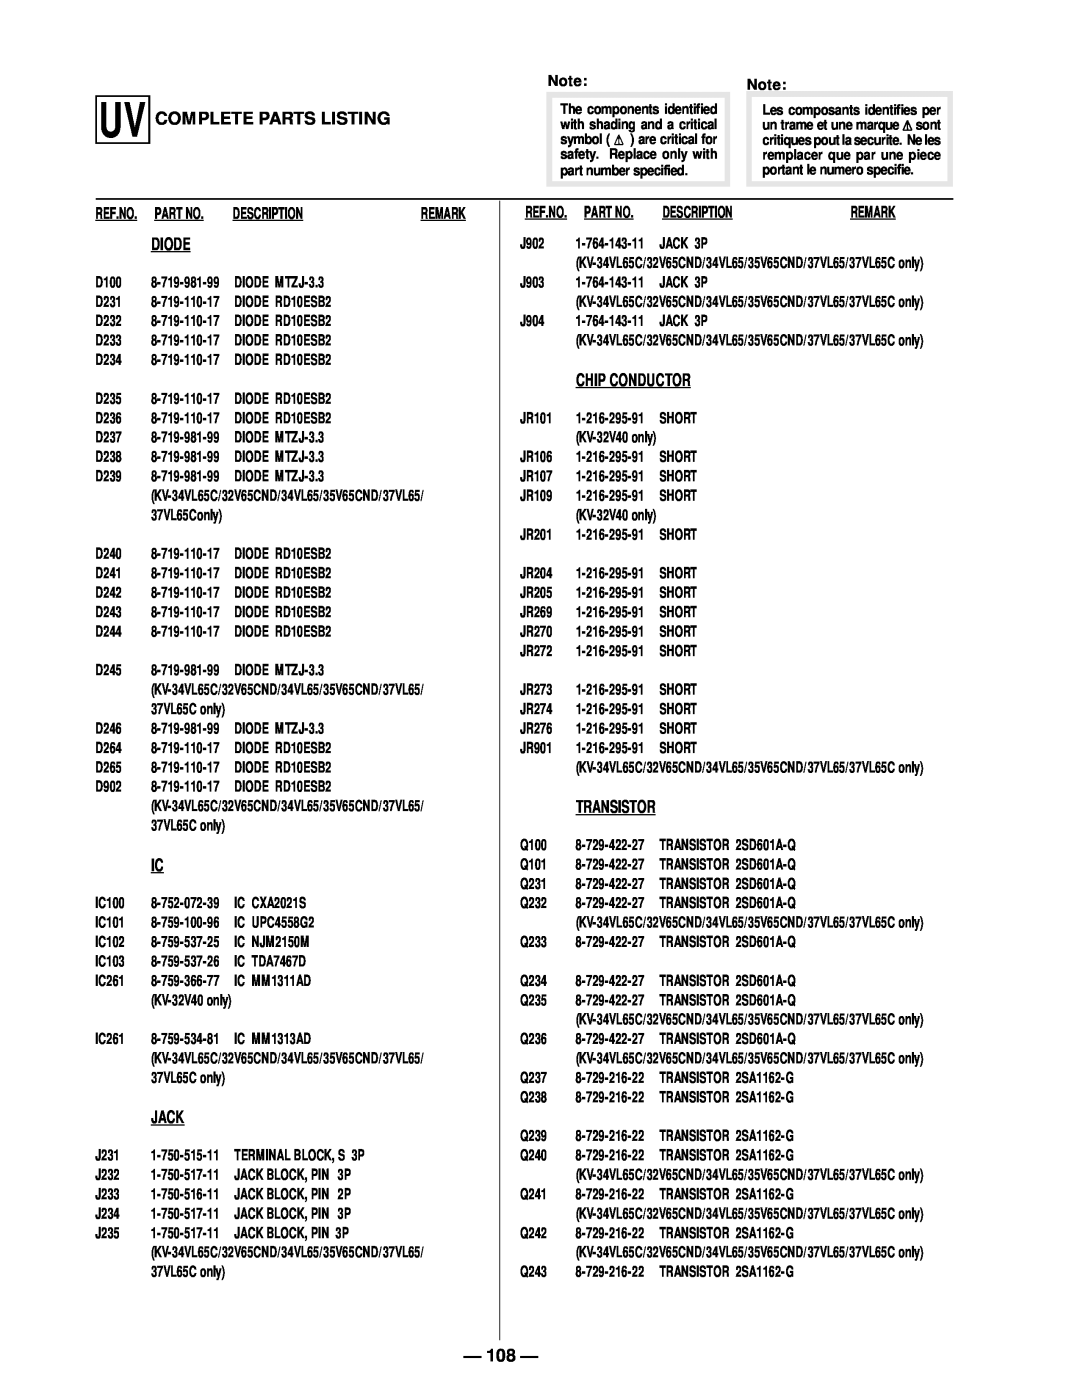 Sony KV-34VL65C, KV 32S40 Complete Parts Listing, Diode, Jack, Chip Conductor, Transistor, Ref.No. Part No, Description 